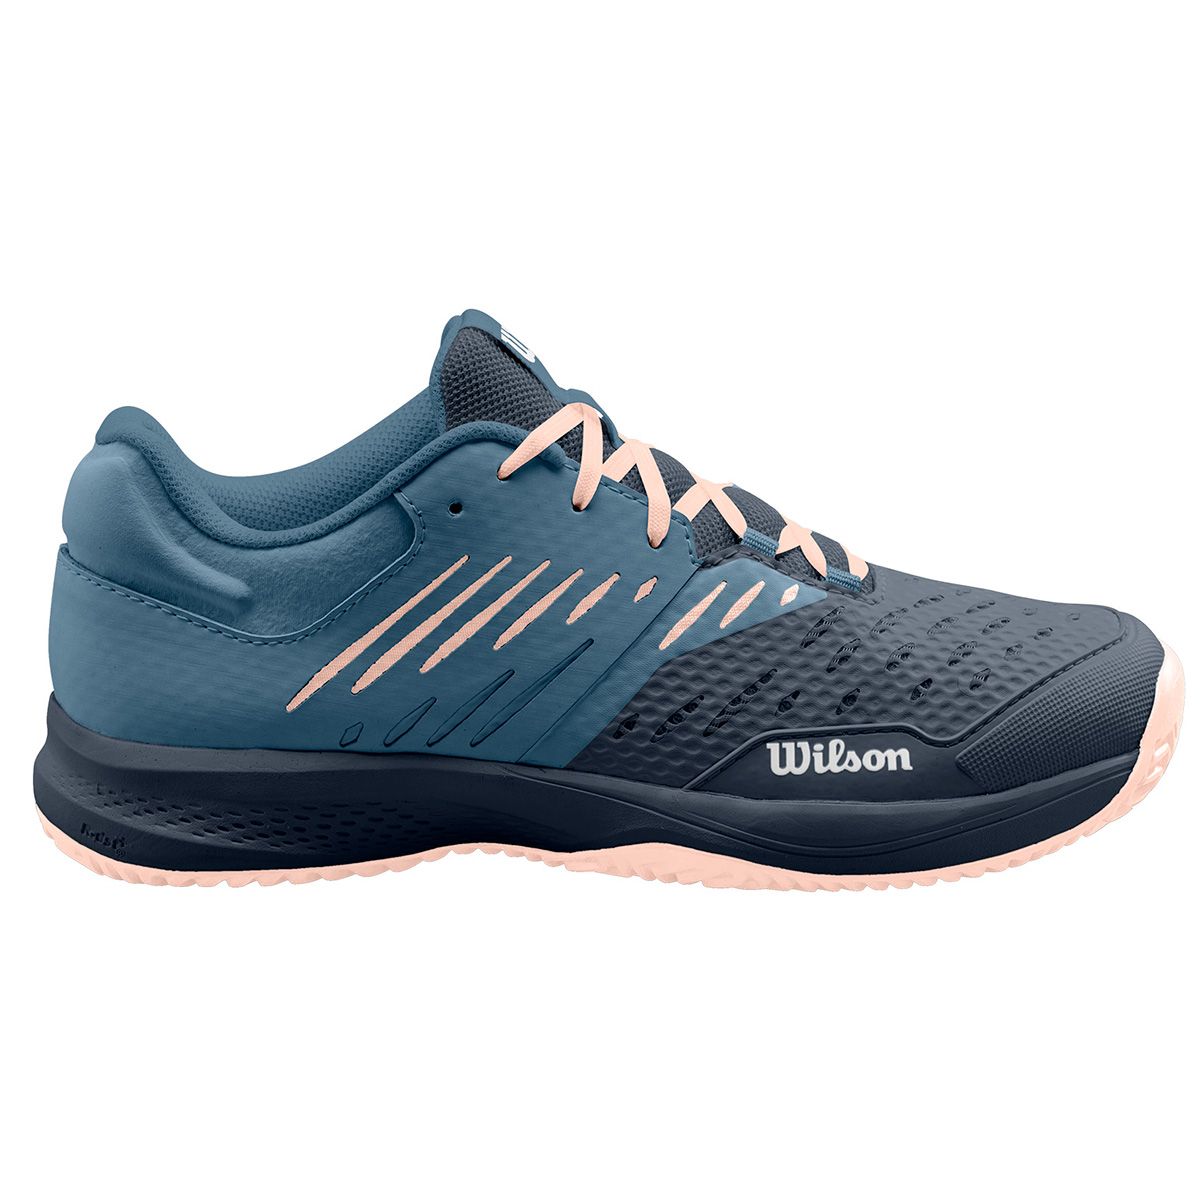 Wilson Kaos Comp 3.0 Women's Tennis Shoes WRS328800